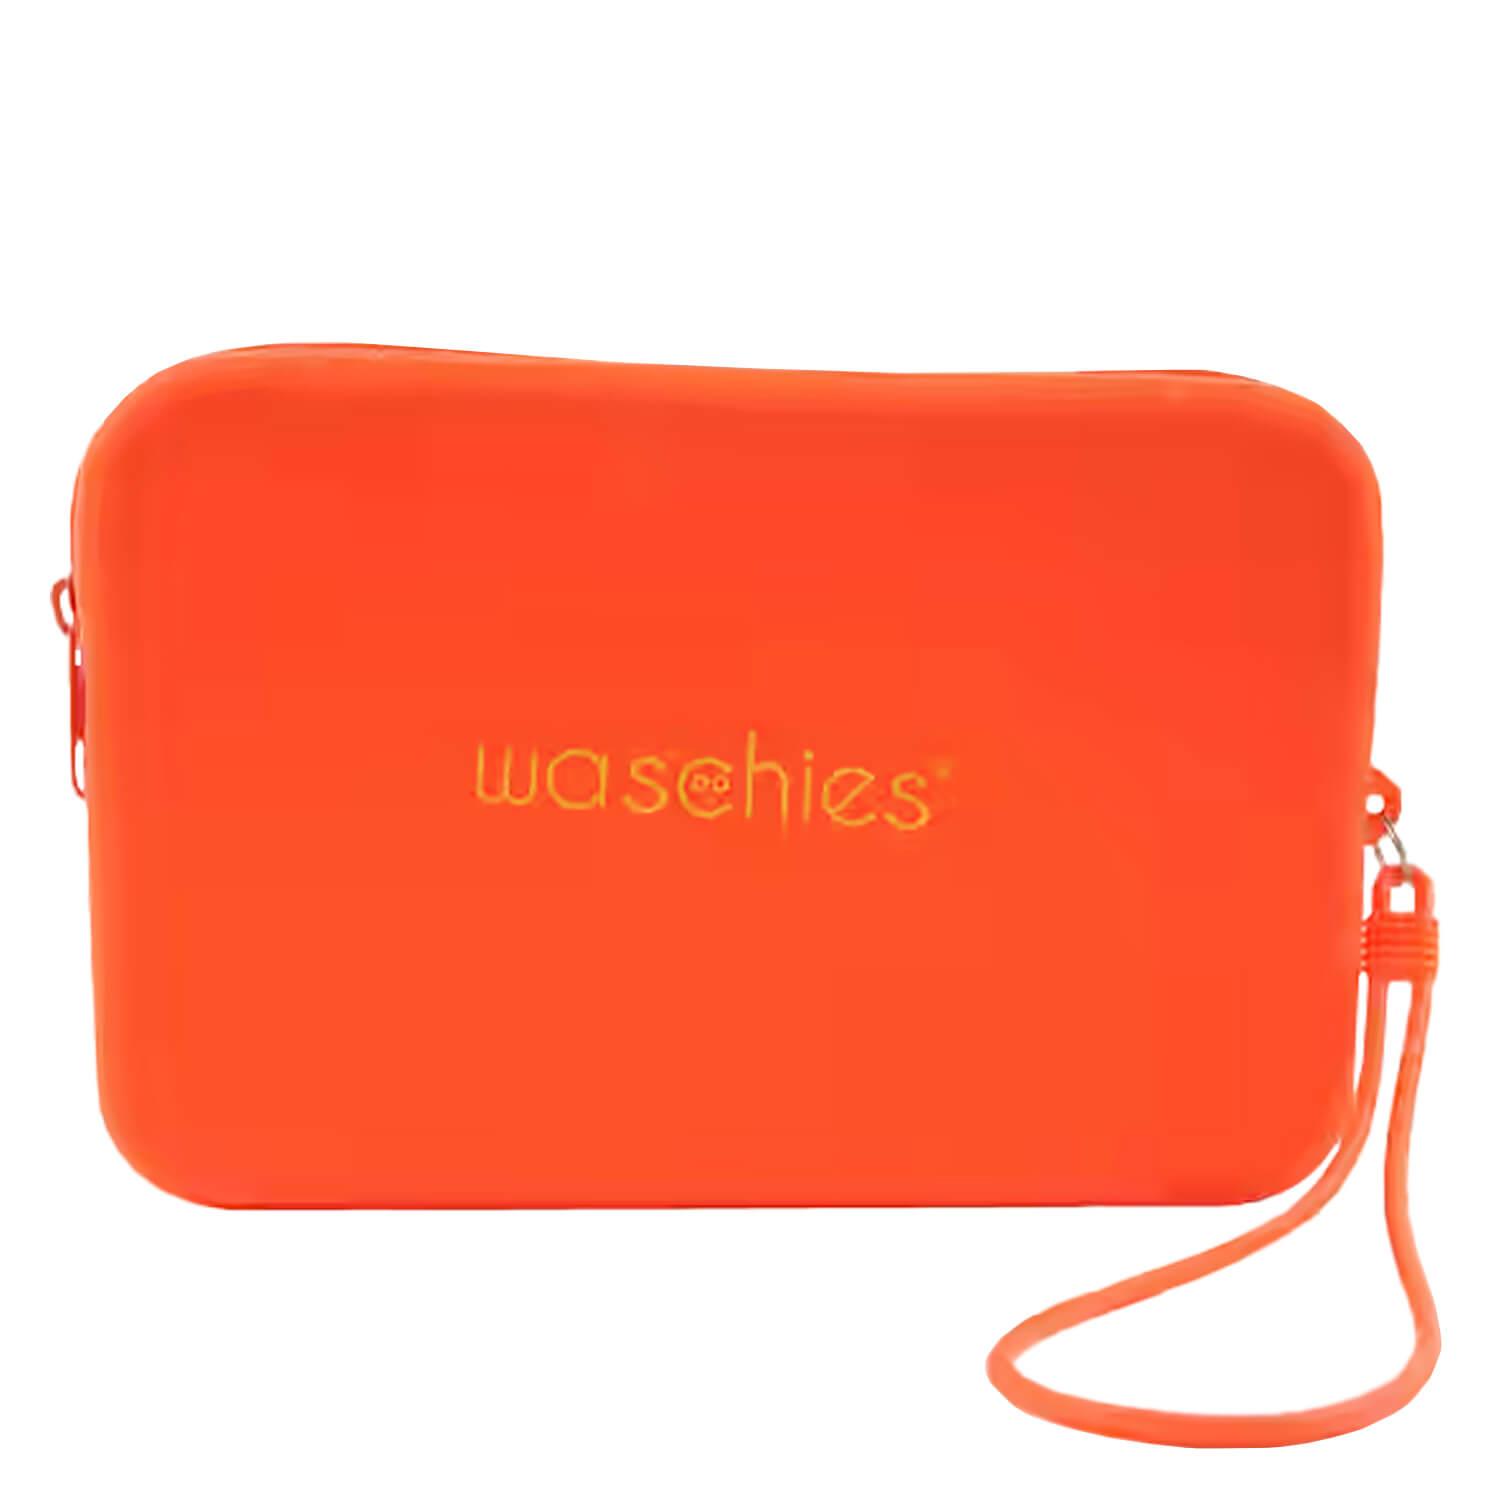 Waschies Faceline - Travel Bag Orange Edition